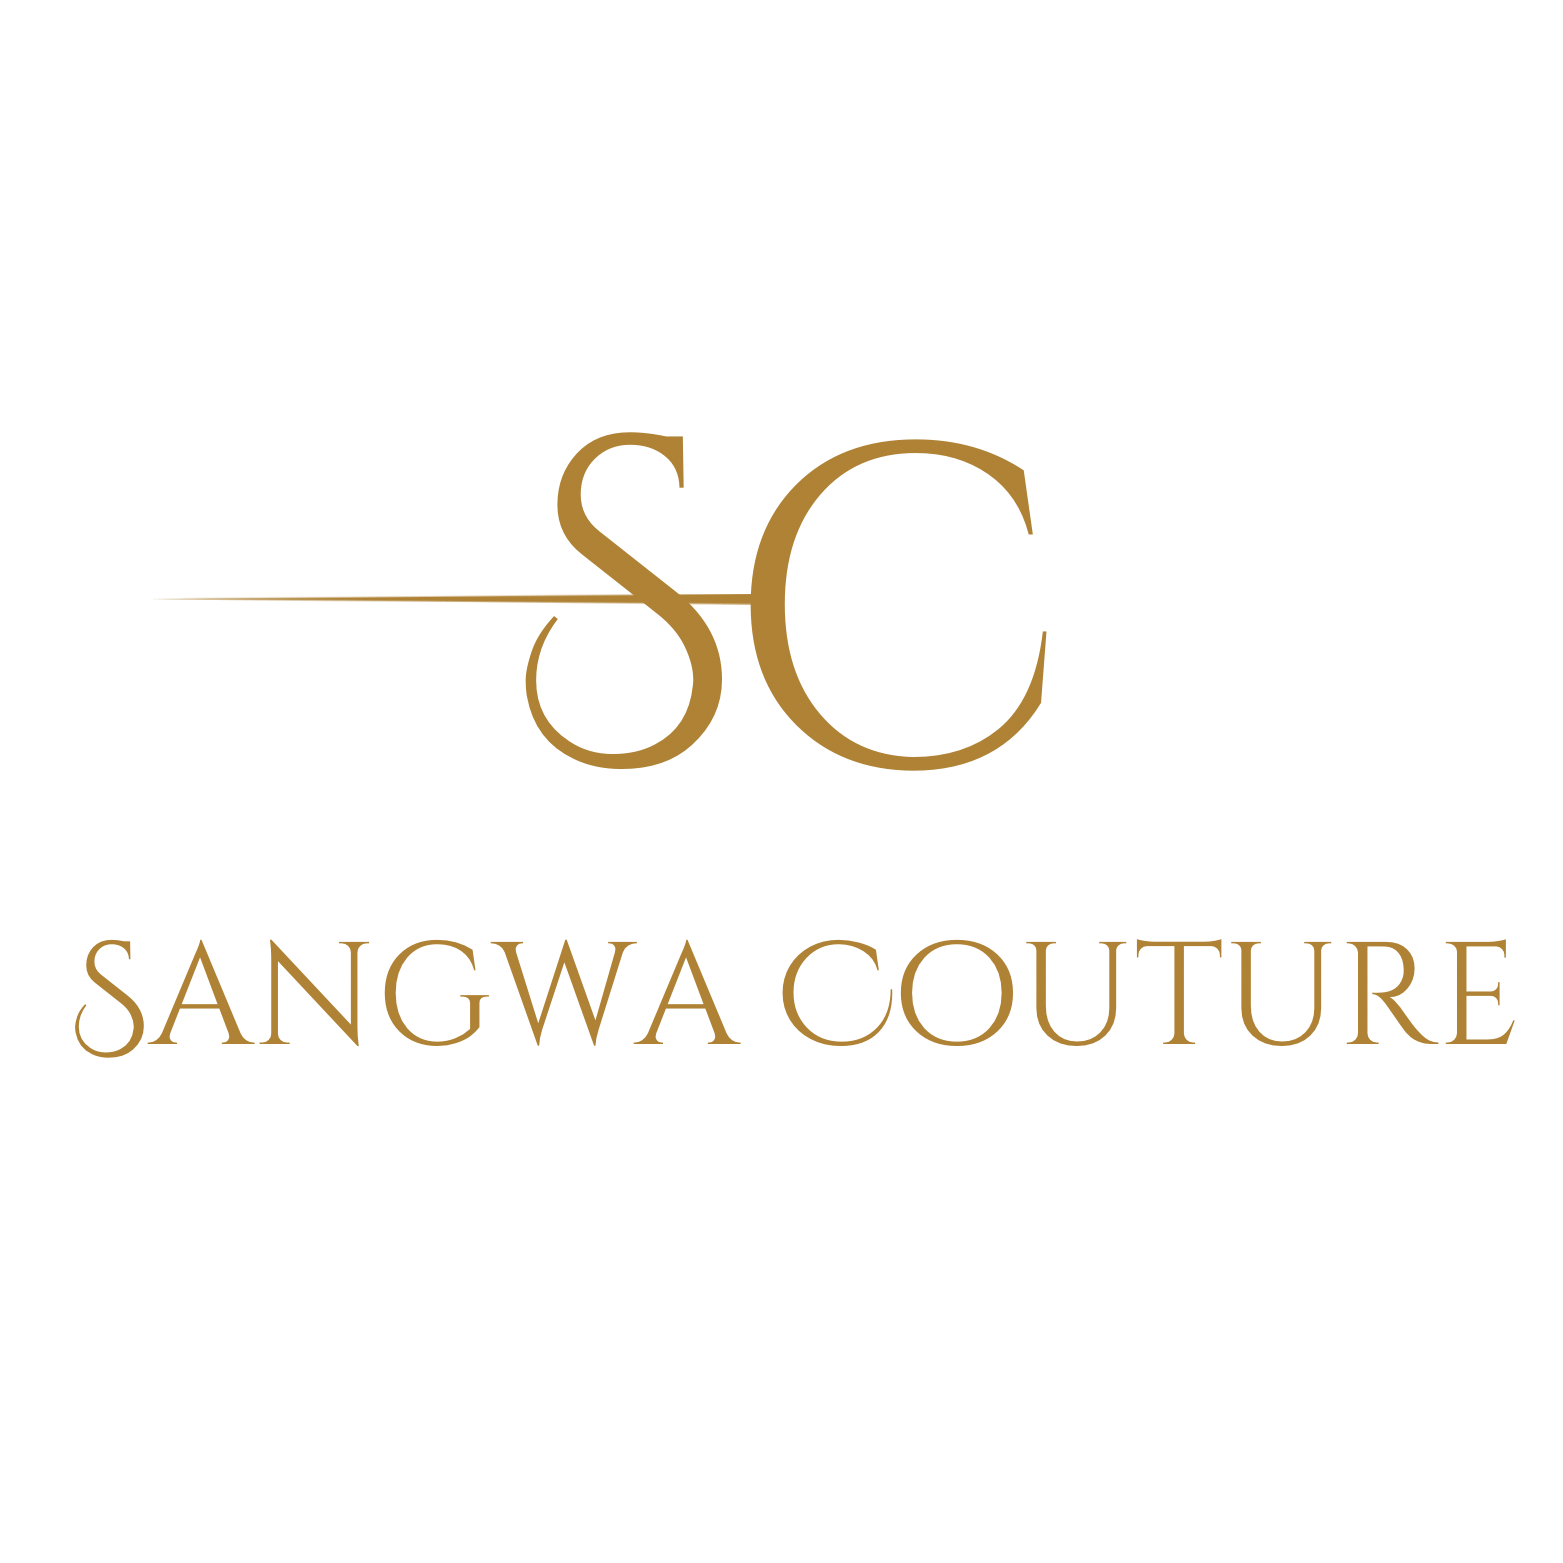 https://a.storyblok.com/f/237156/1563x1563/2e07f5021d/transparent-logo-sangwa-couture.PNG